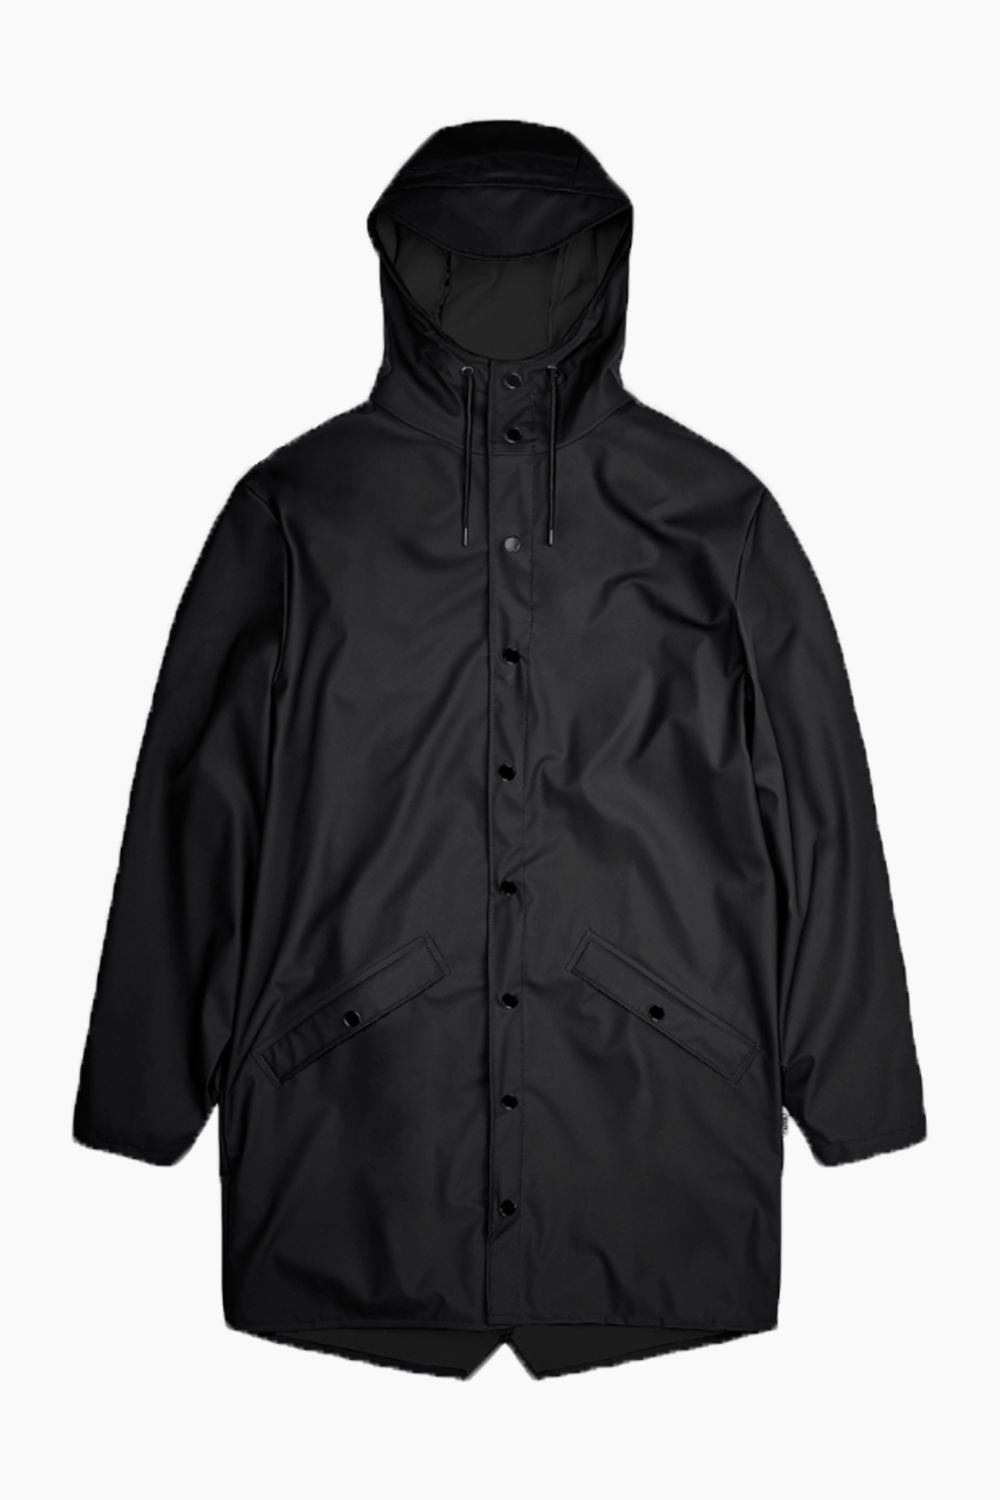 Long Jacket W3 - Black - Rains - Sort M